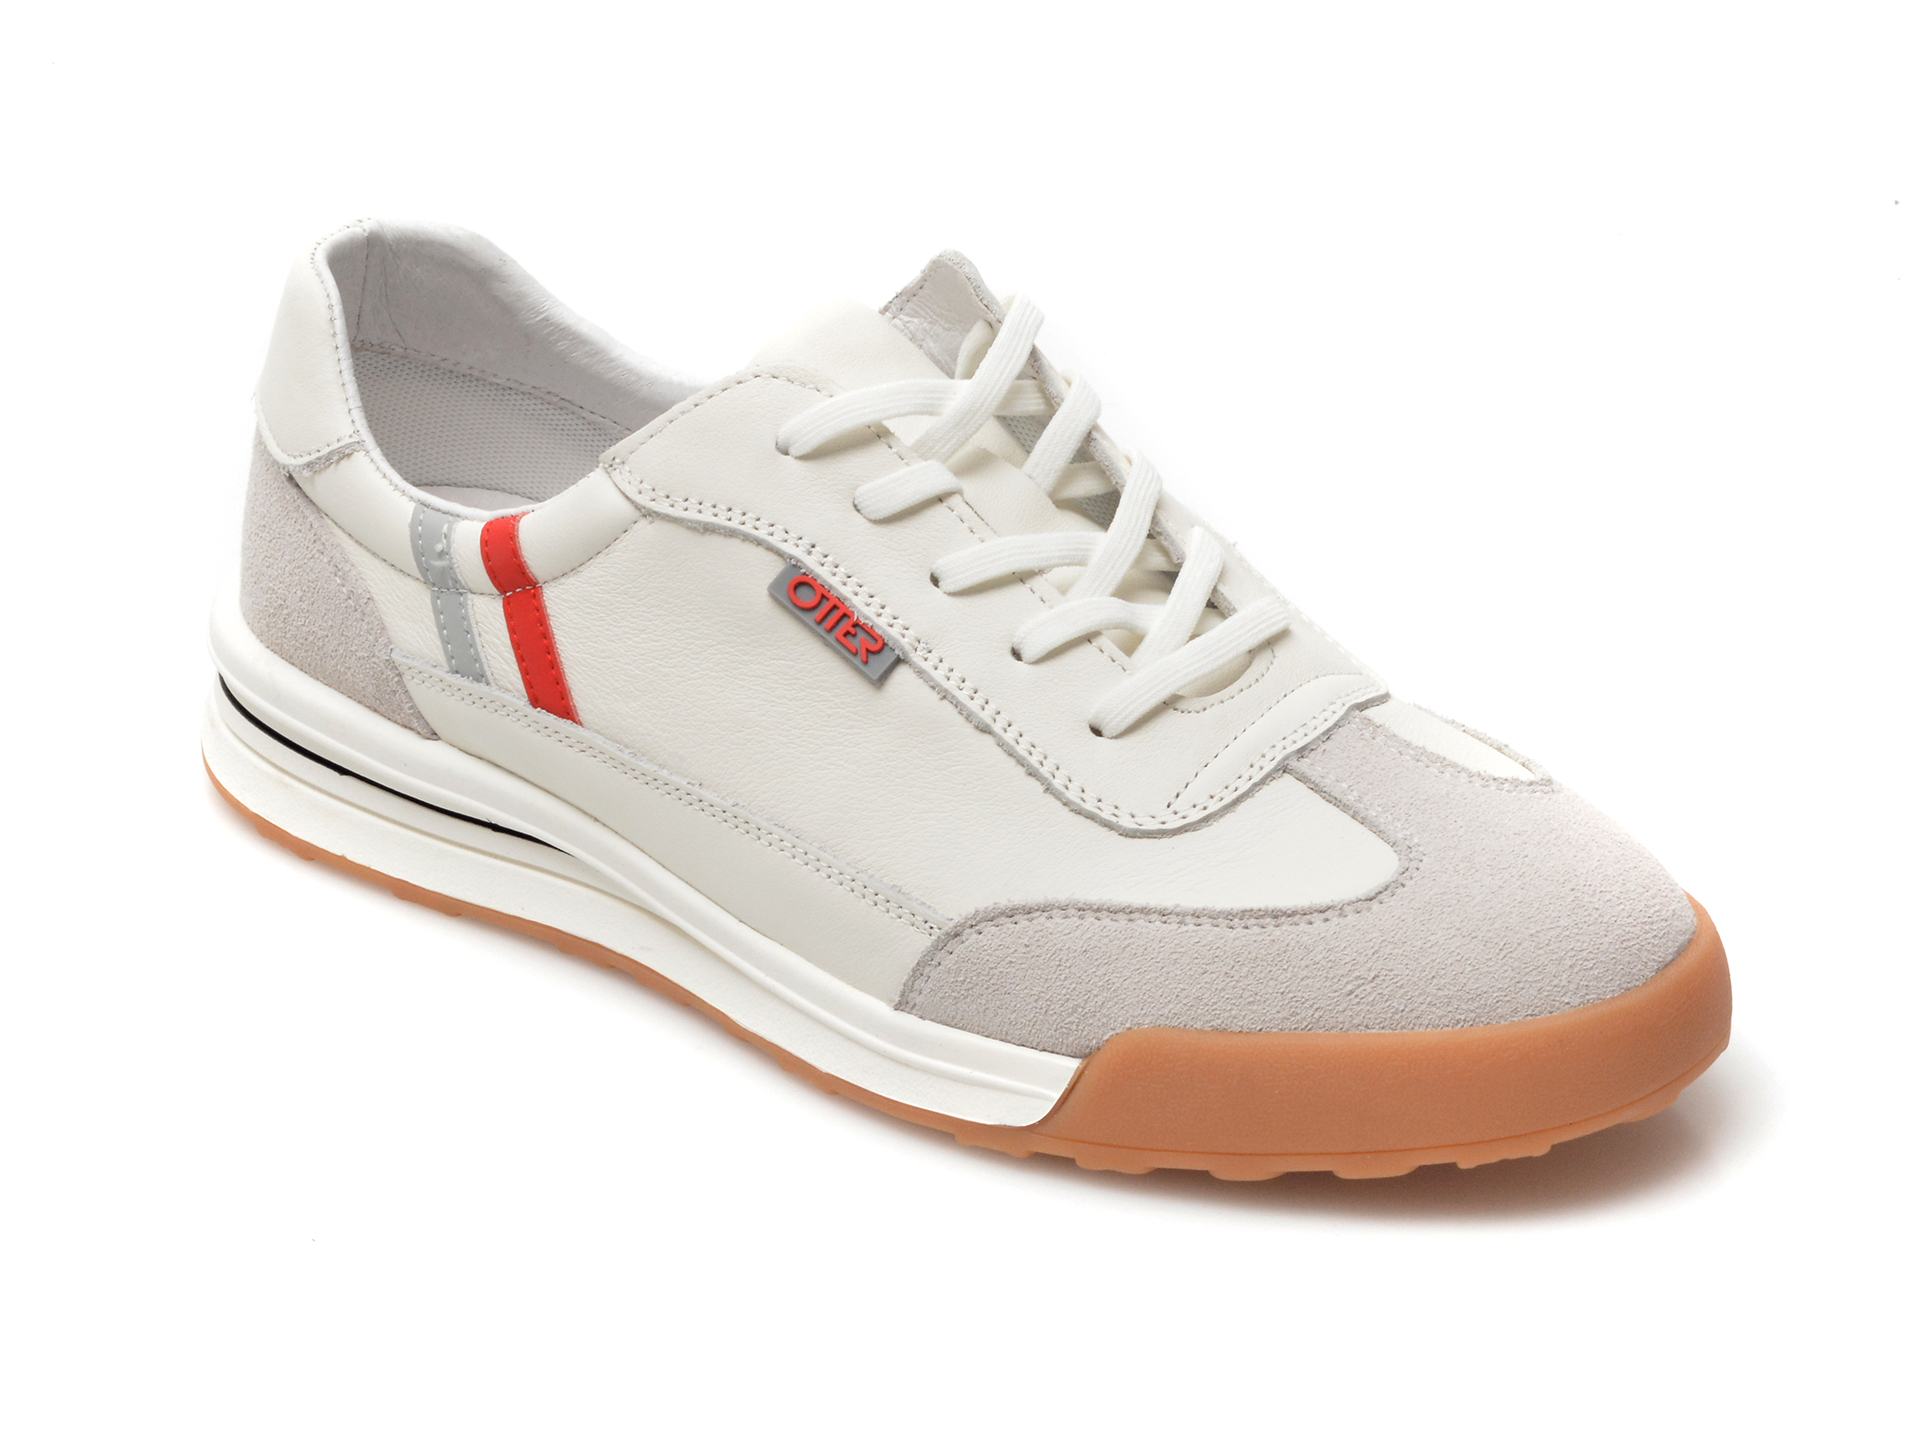 Pantofi sport OTTER albi, L17387, din piele naturala /barbati/pantofi